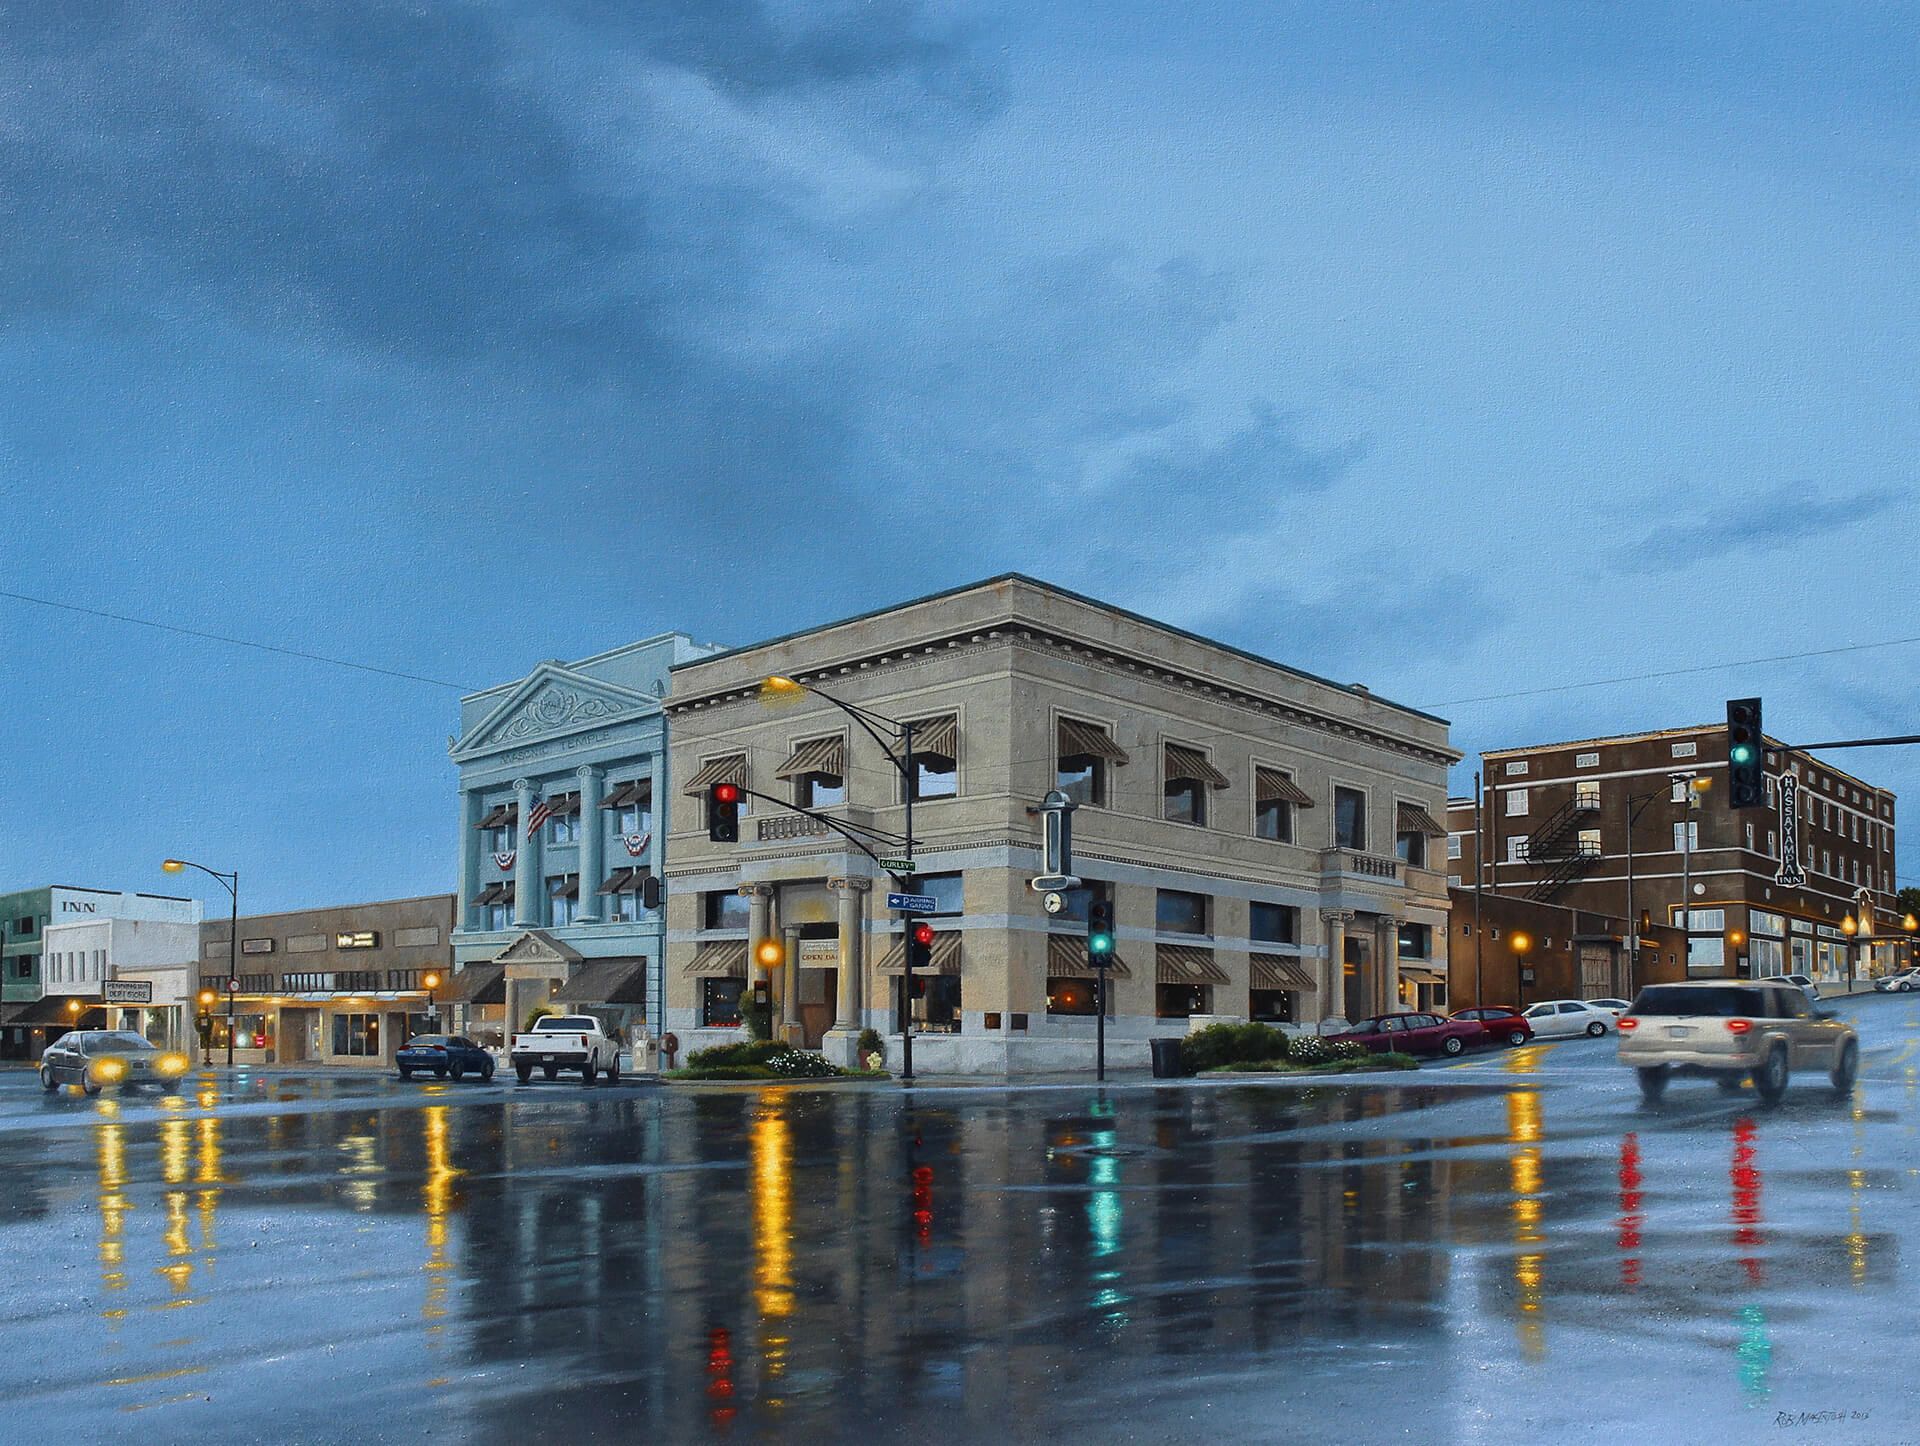 Photorealistic painting of a rainy day in Prescott Arizona